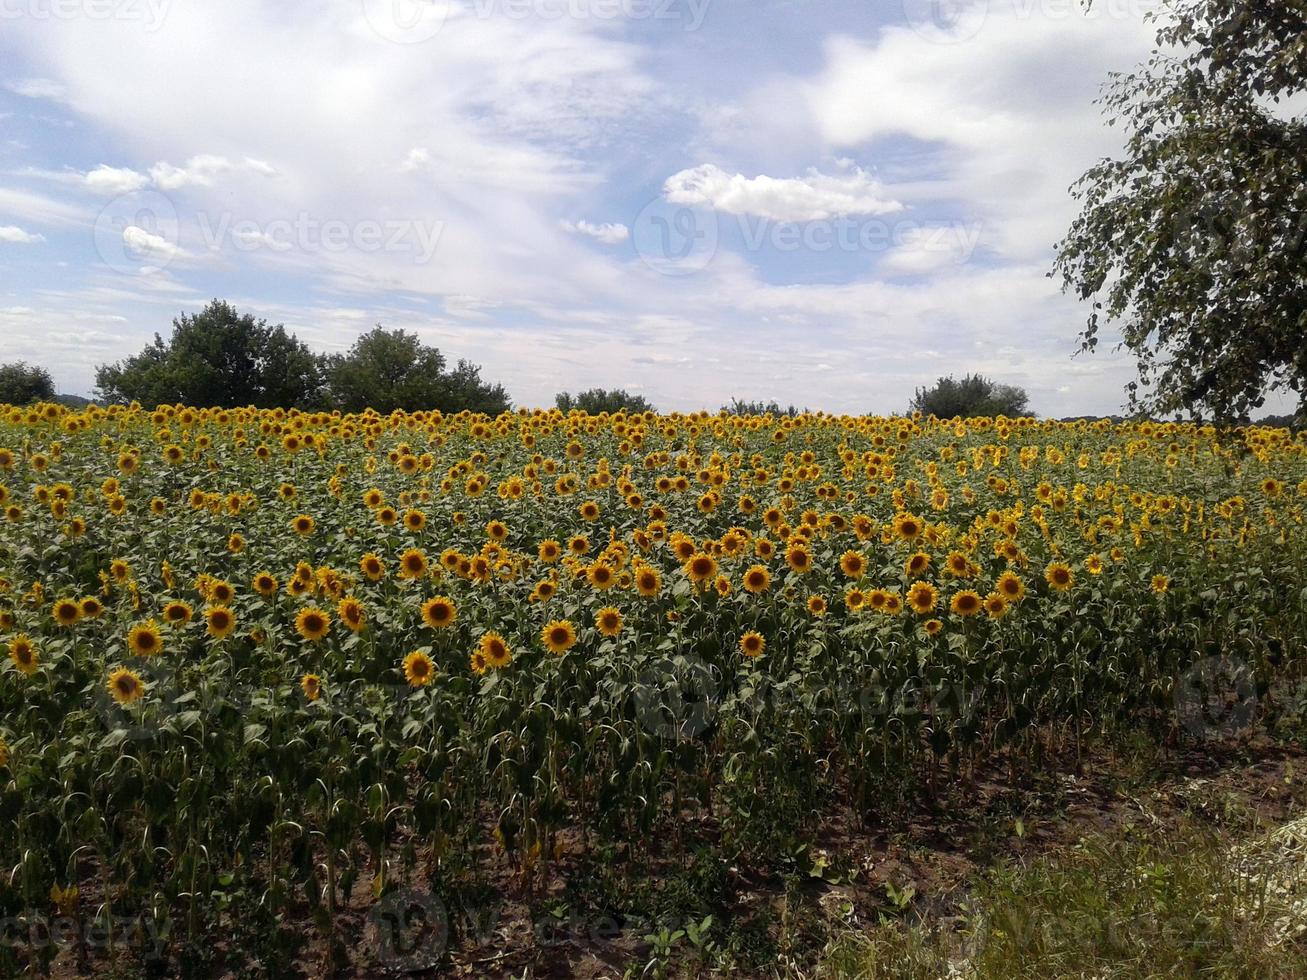 Field of sunflowers texture photo